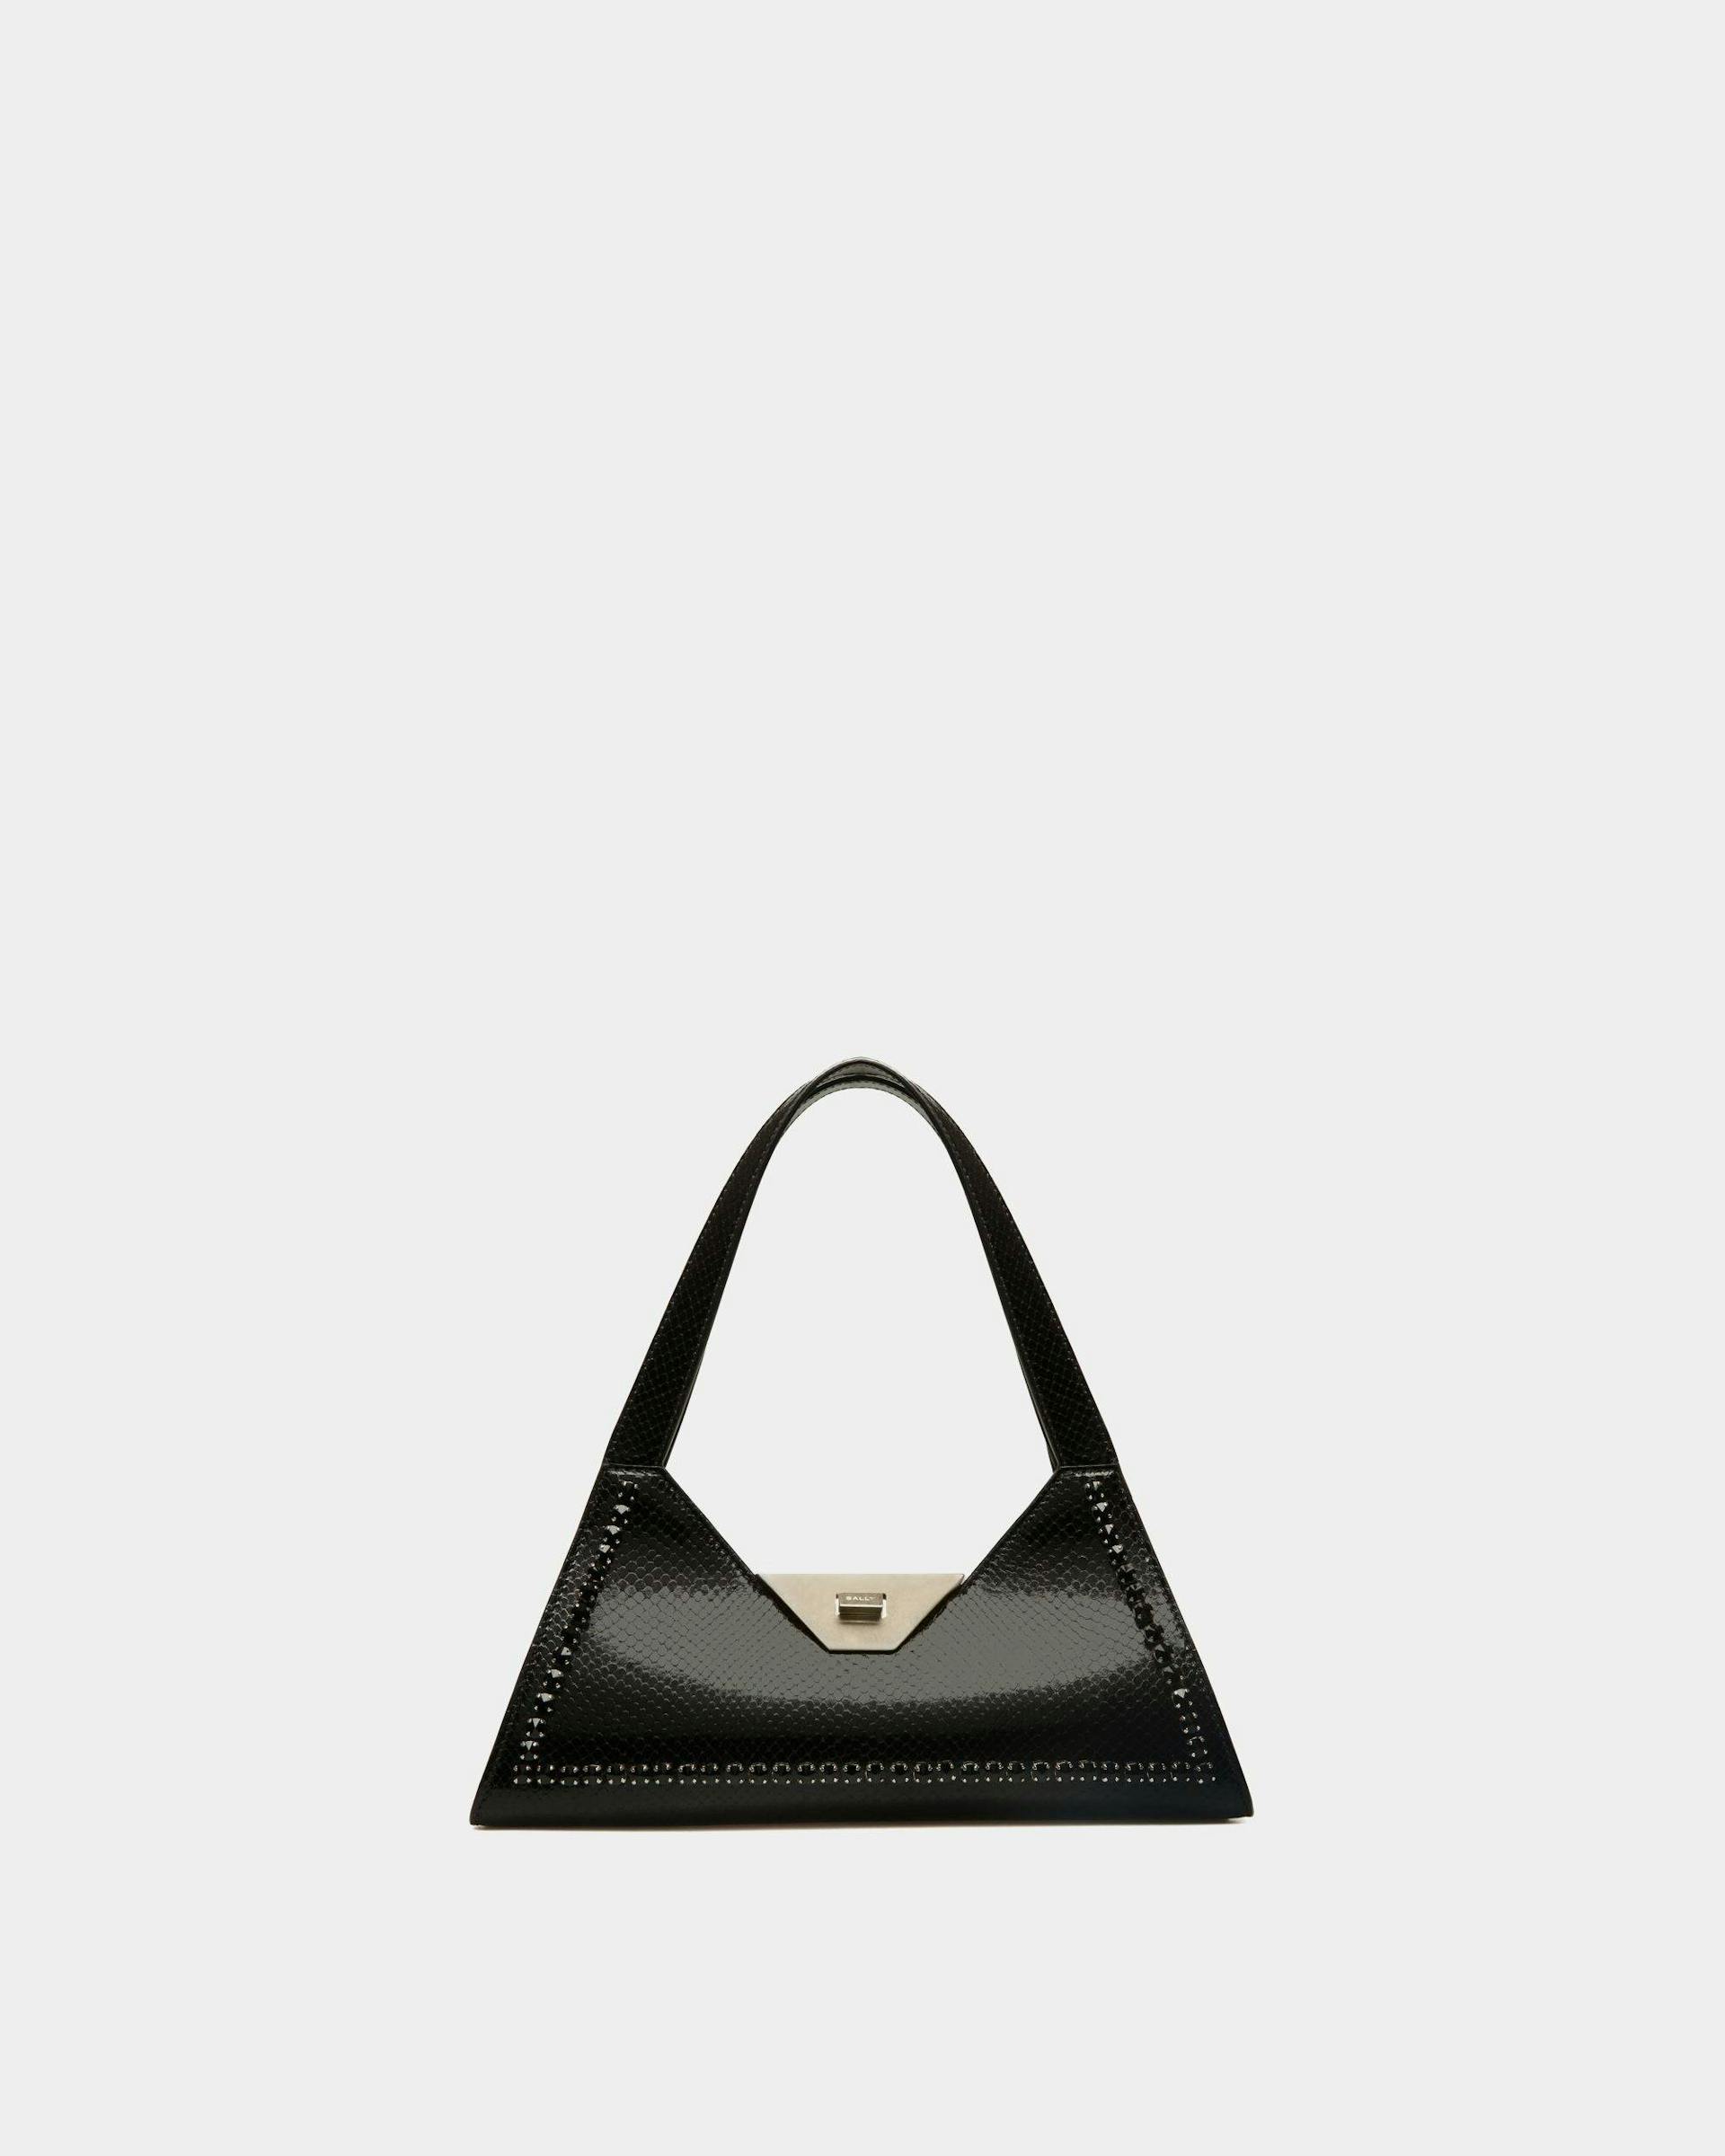 Women's Tilt Small Shoulder Bag in Black Python Printed Leather | Bally | Still Life Front